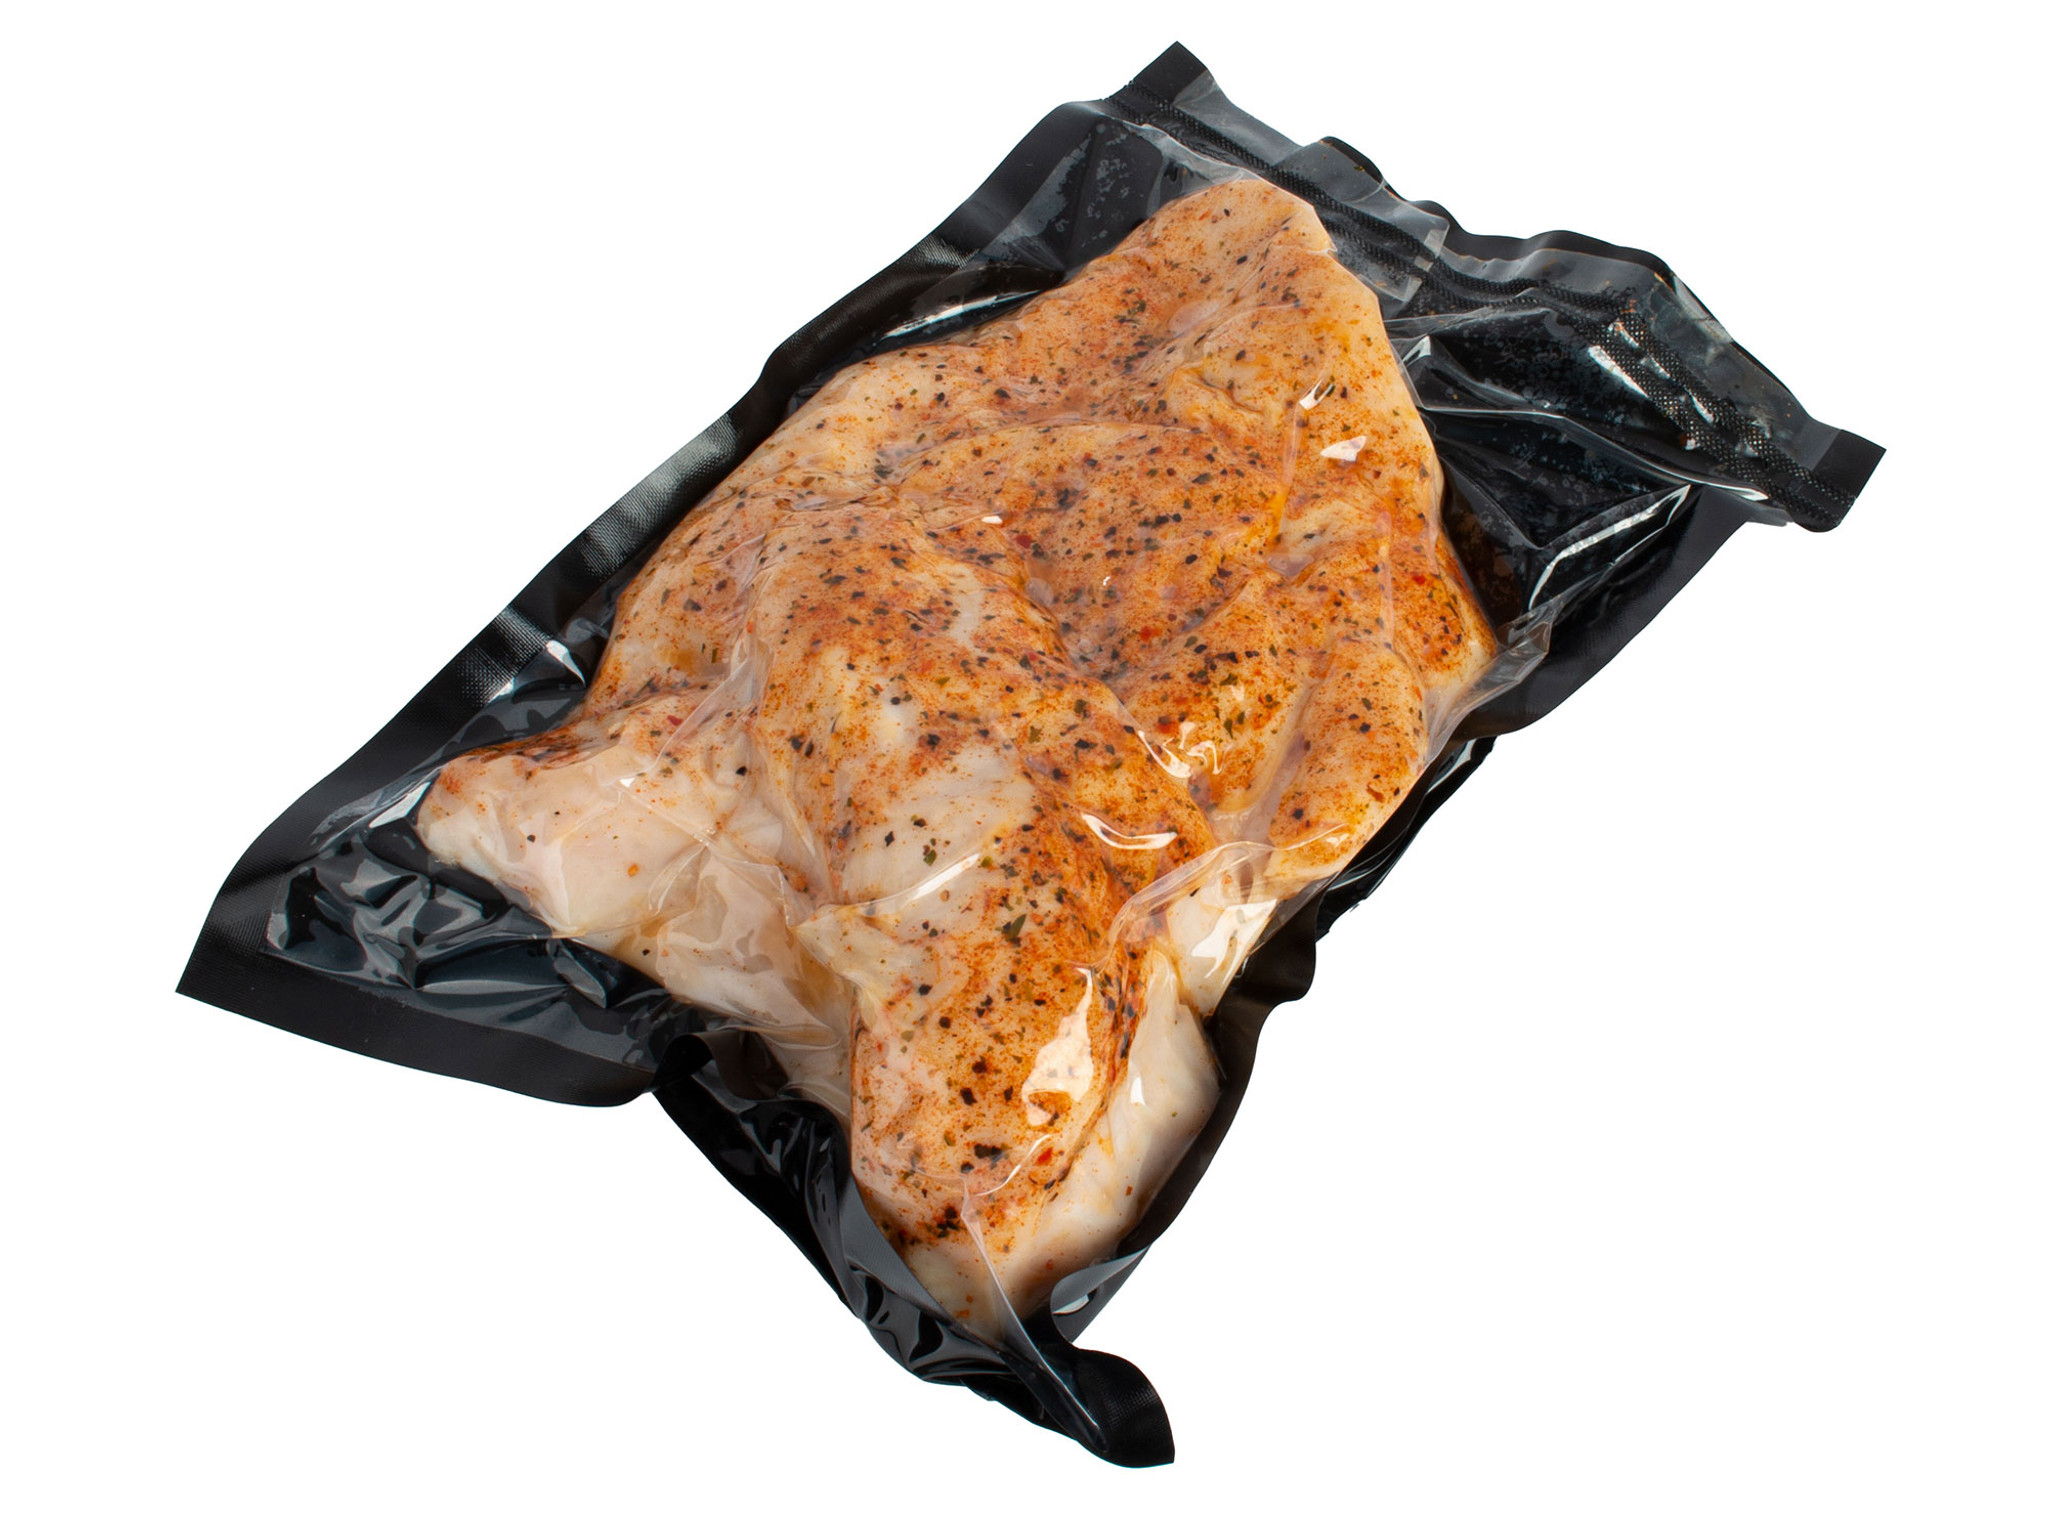 Nylon Black Vacuum Sealer Bags 5MIL For Food Sous Vide Packaging Freezer  Safe